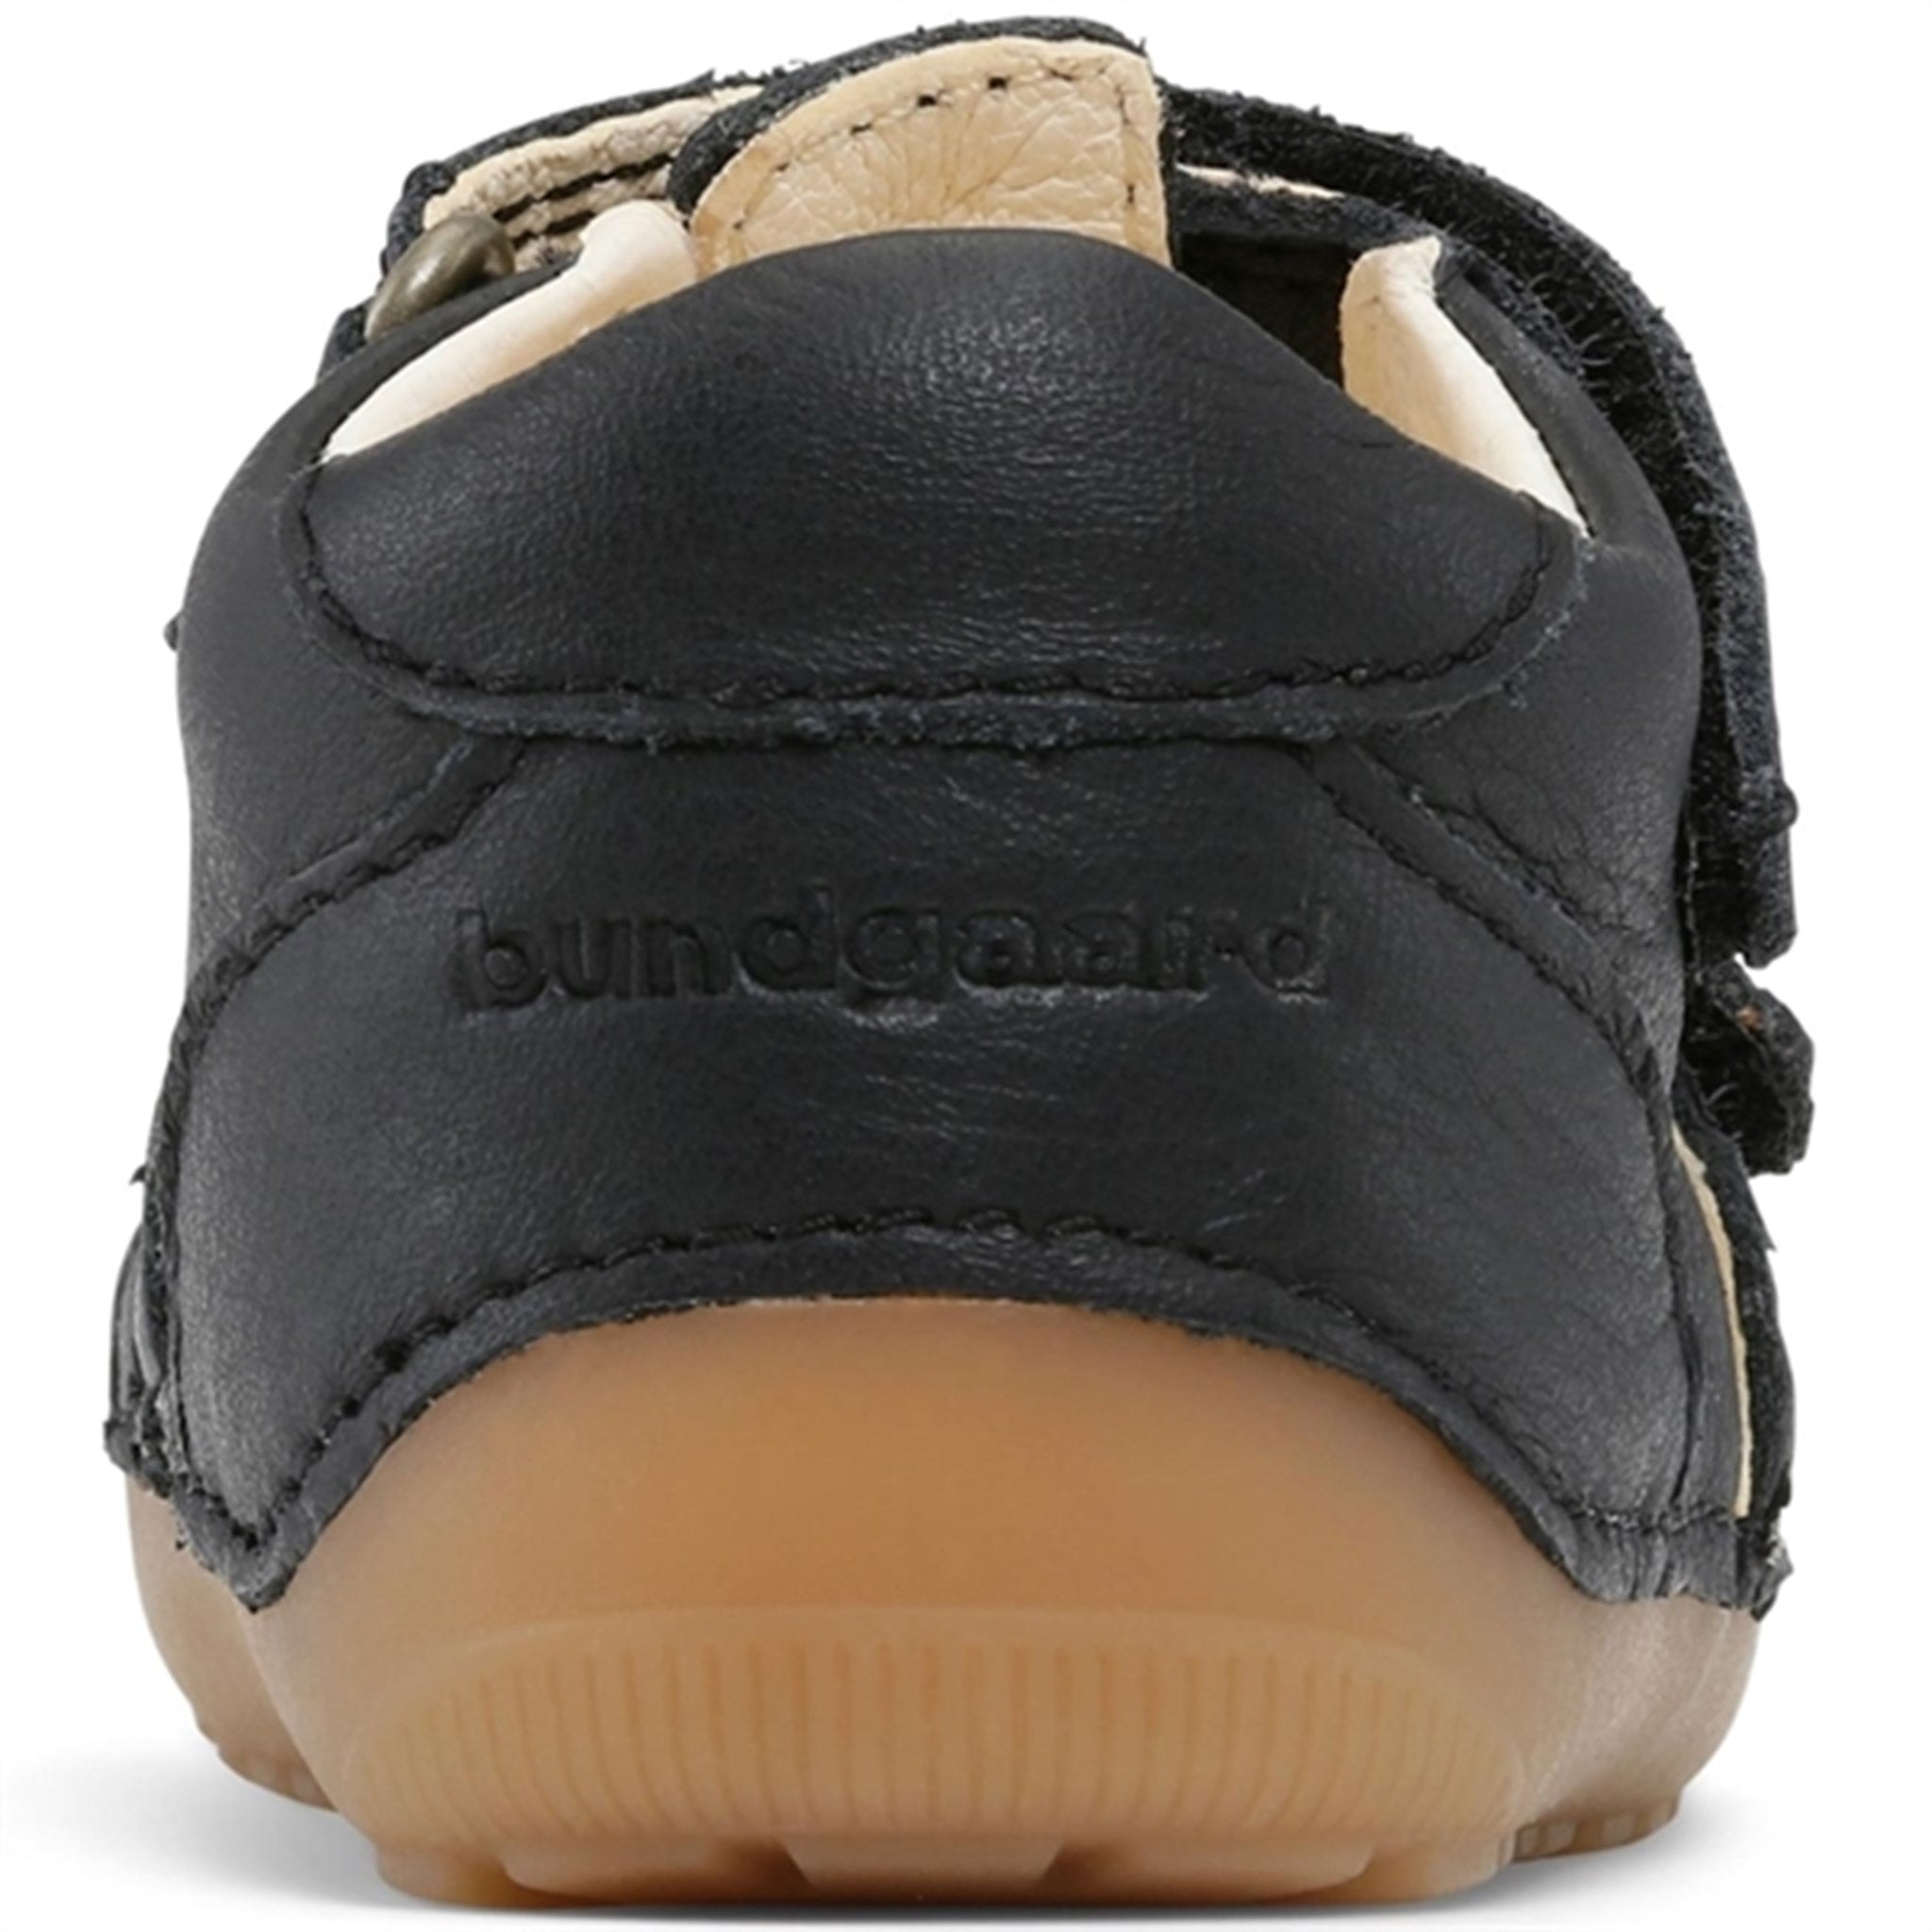 Bundgaard Petit Sandal Black Gum 5